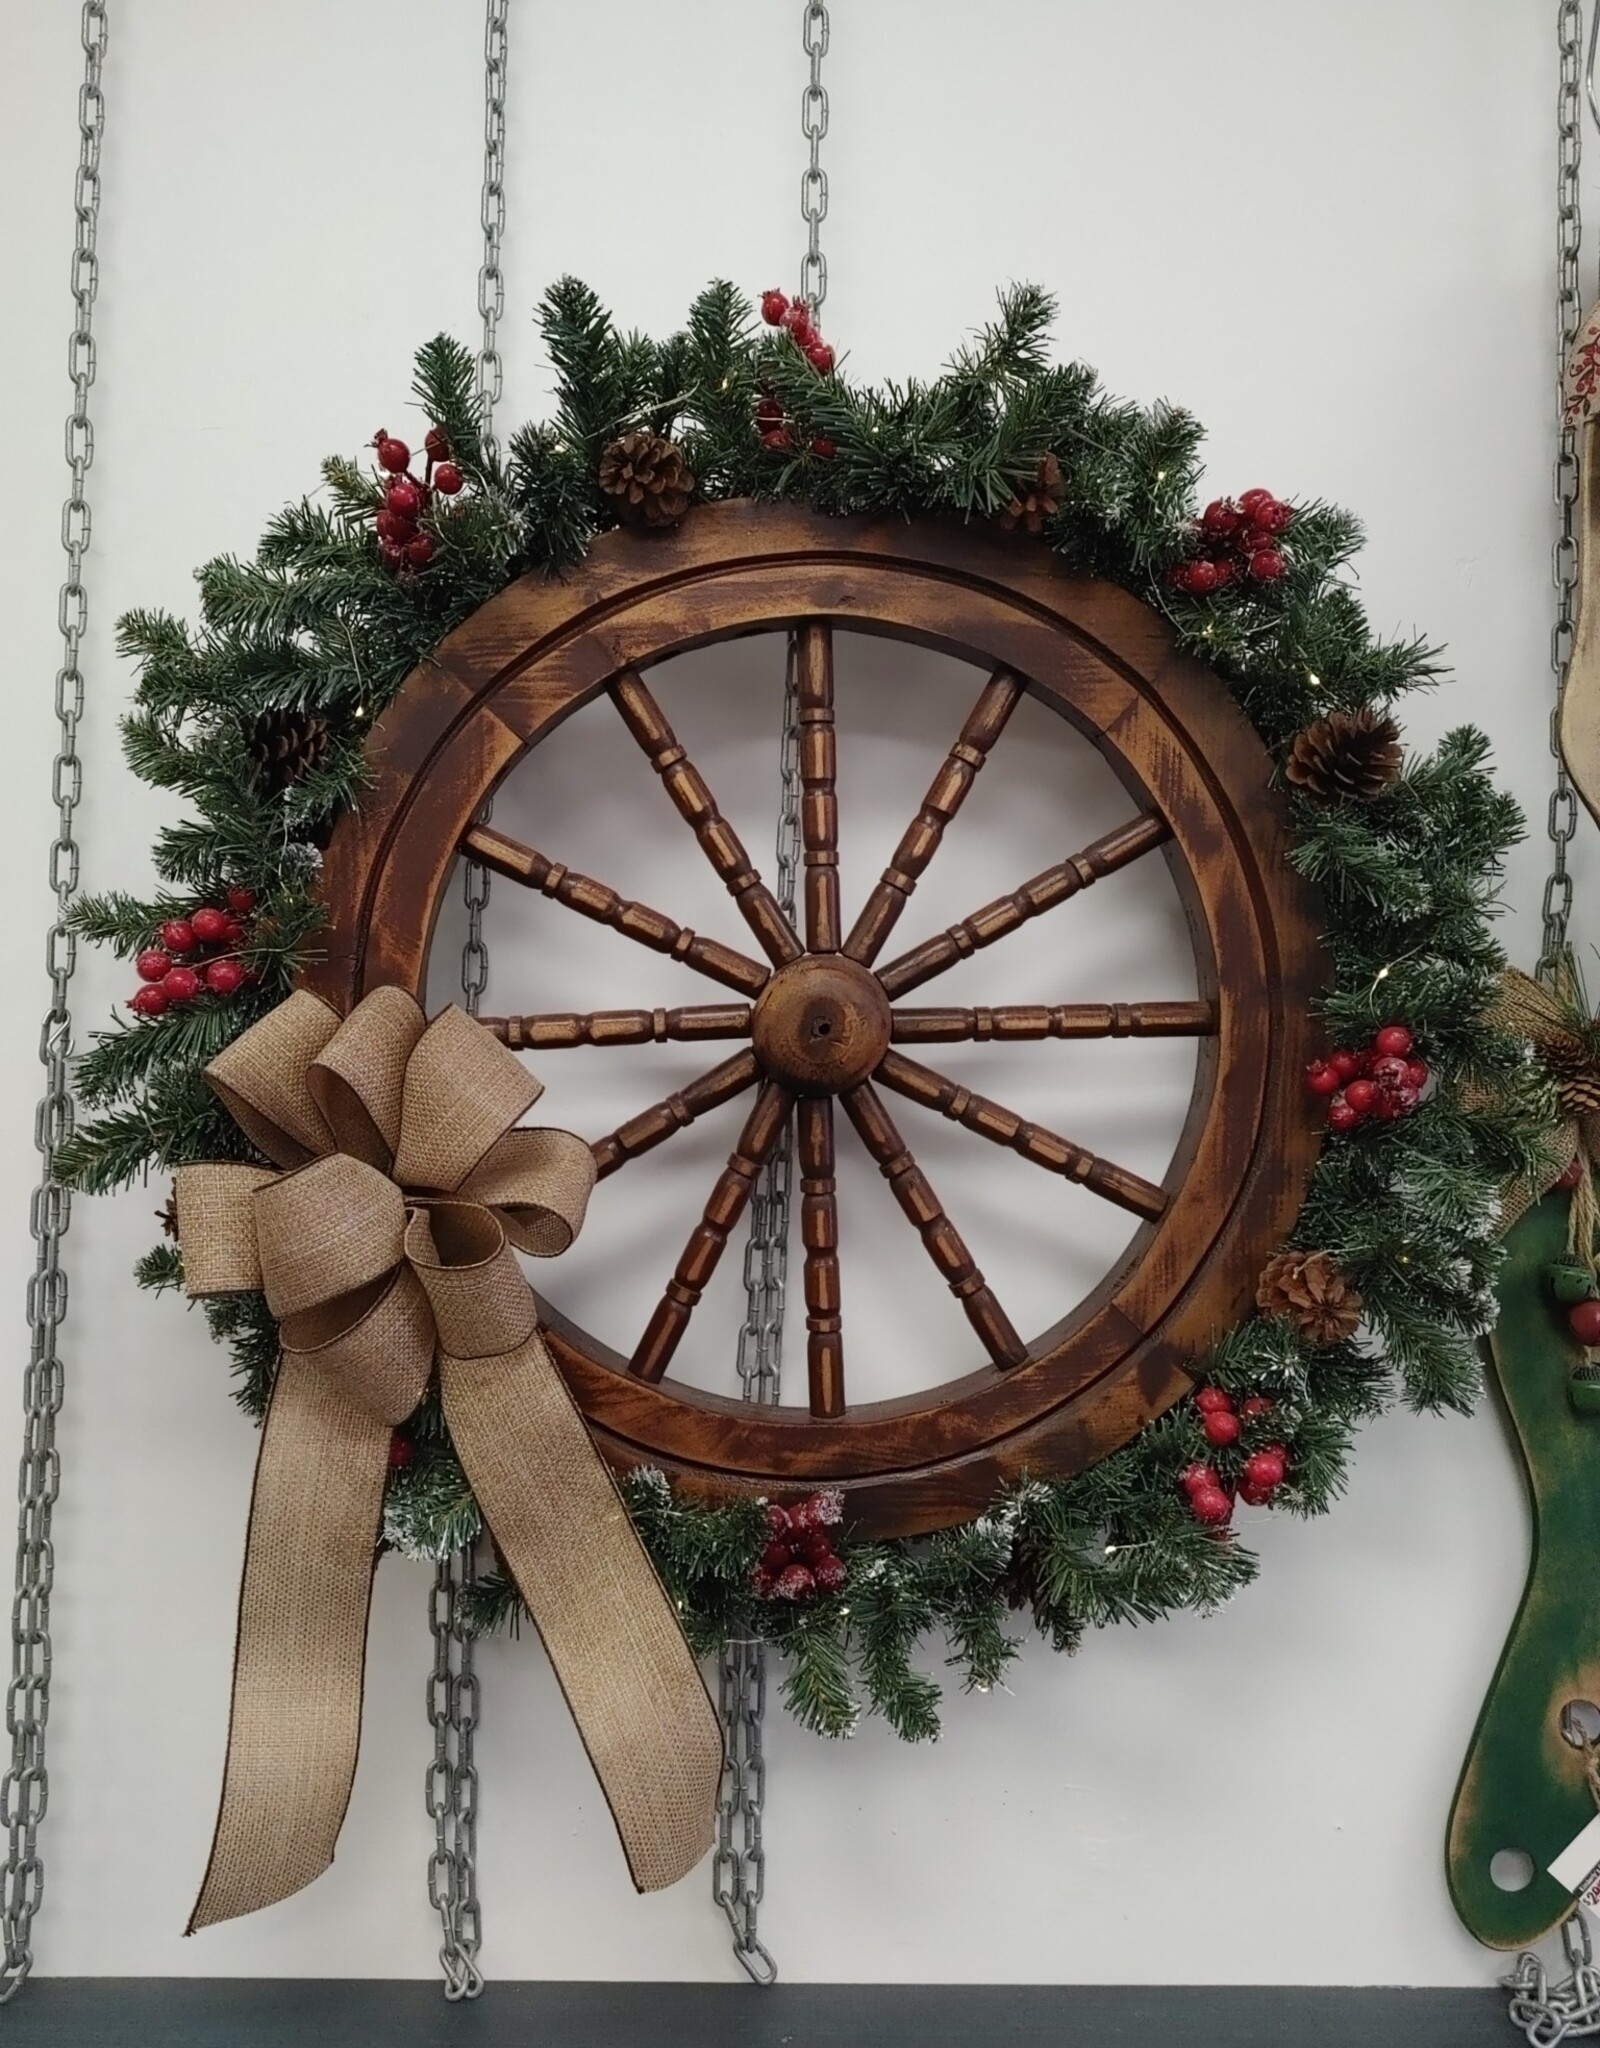 Wagon Wheel Lighted Wreath